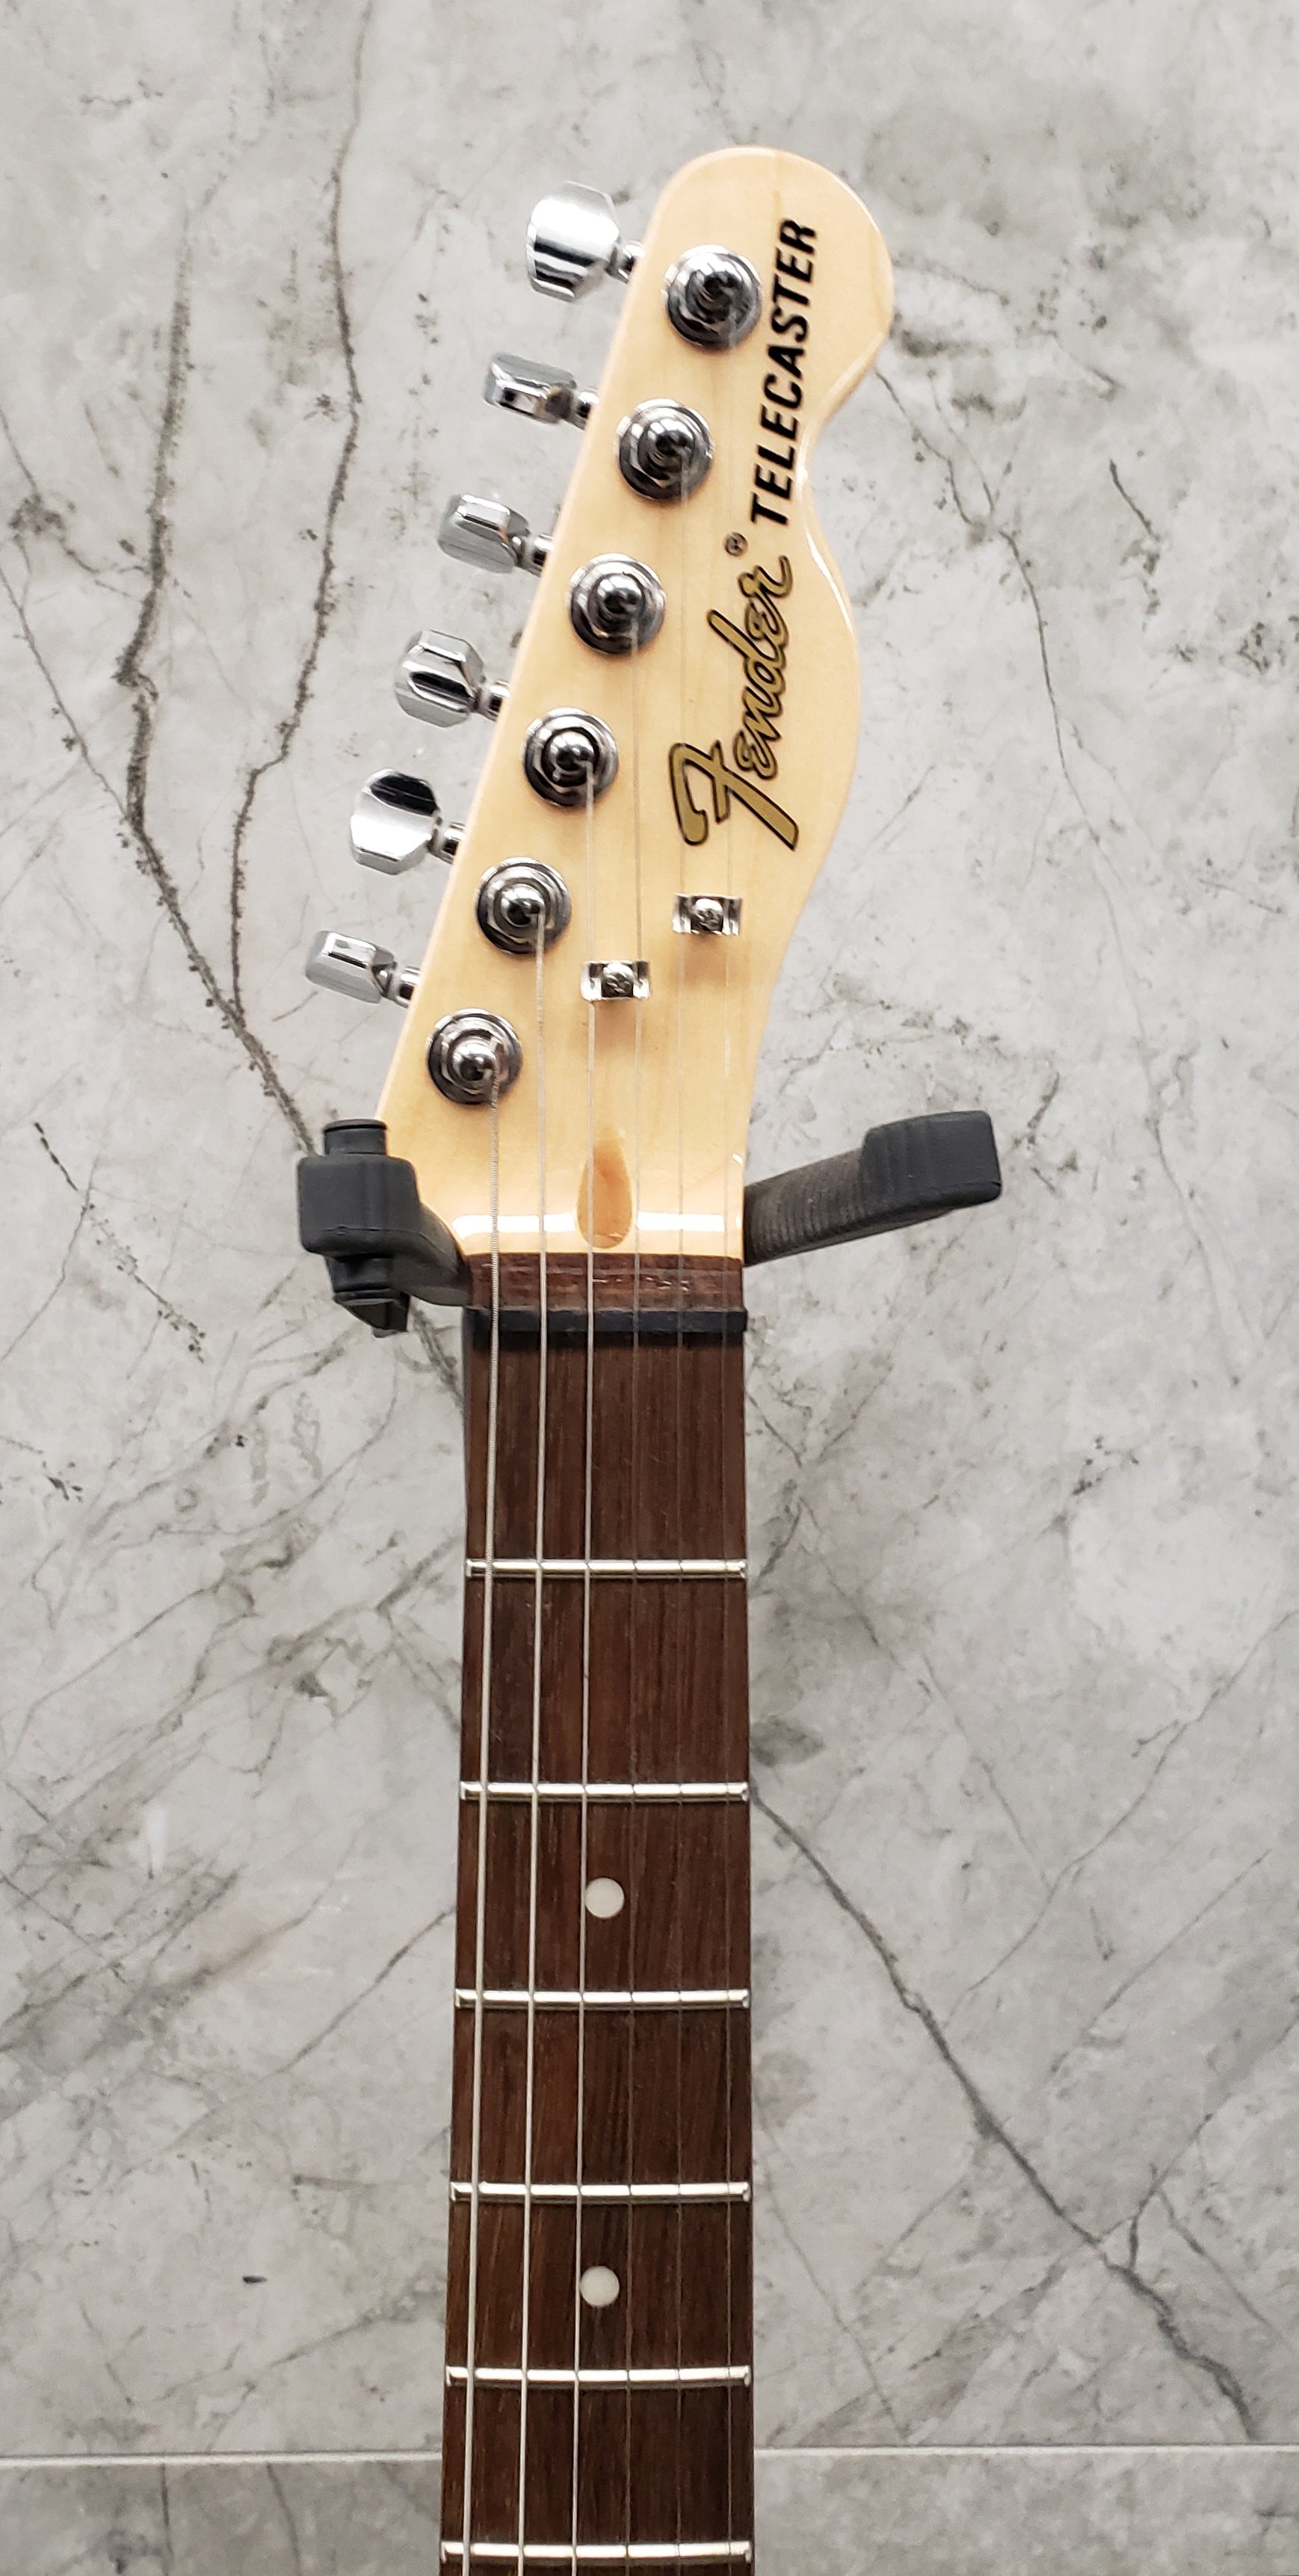 Fender Jim Adkins JA-90 Telecaster Thinline Natural 0262354521 SERIAL NUMBER CF21004612 - 7.2 LBS